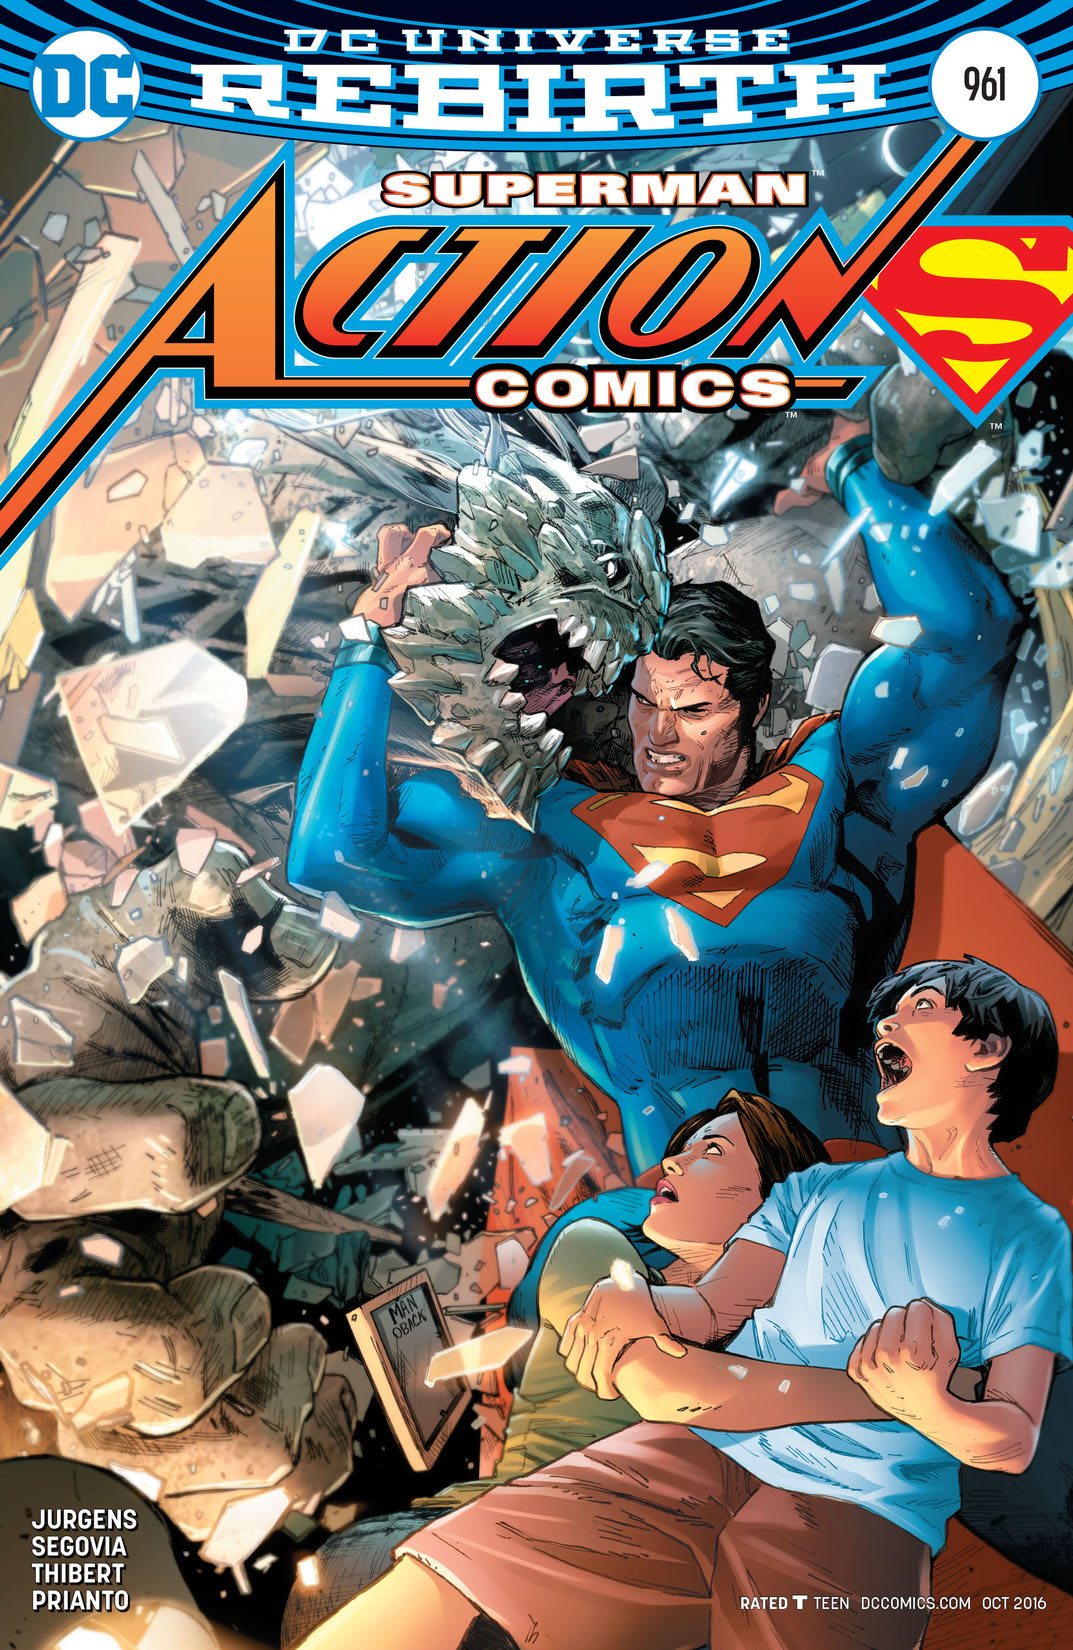 Action Comics (2016-) #961 preview images